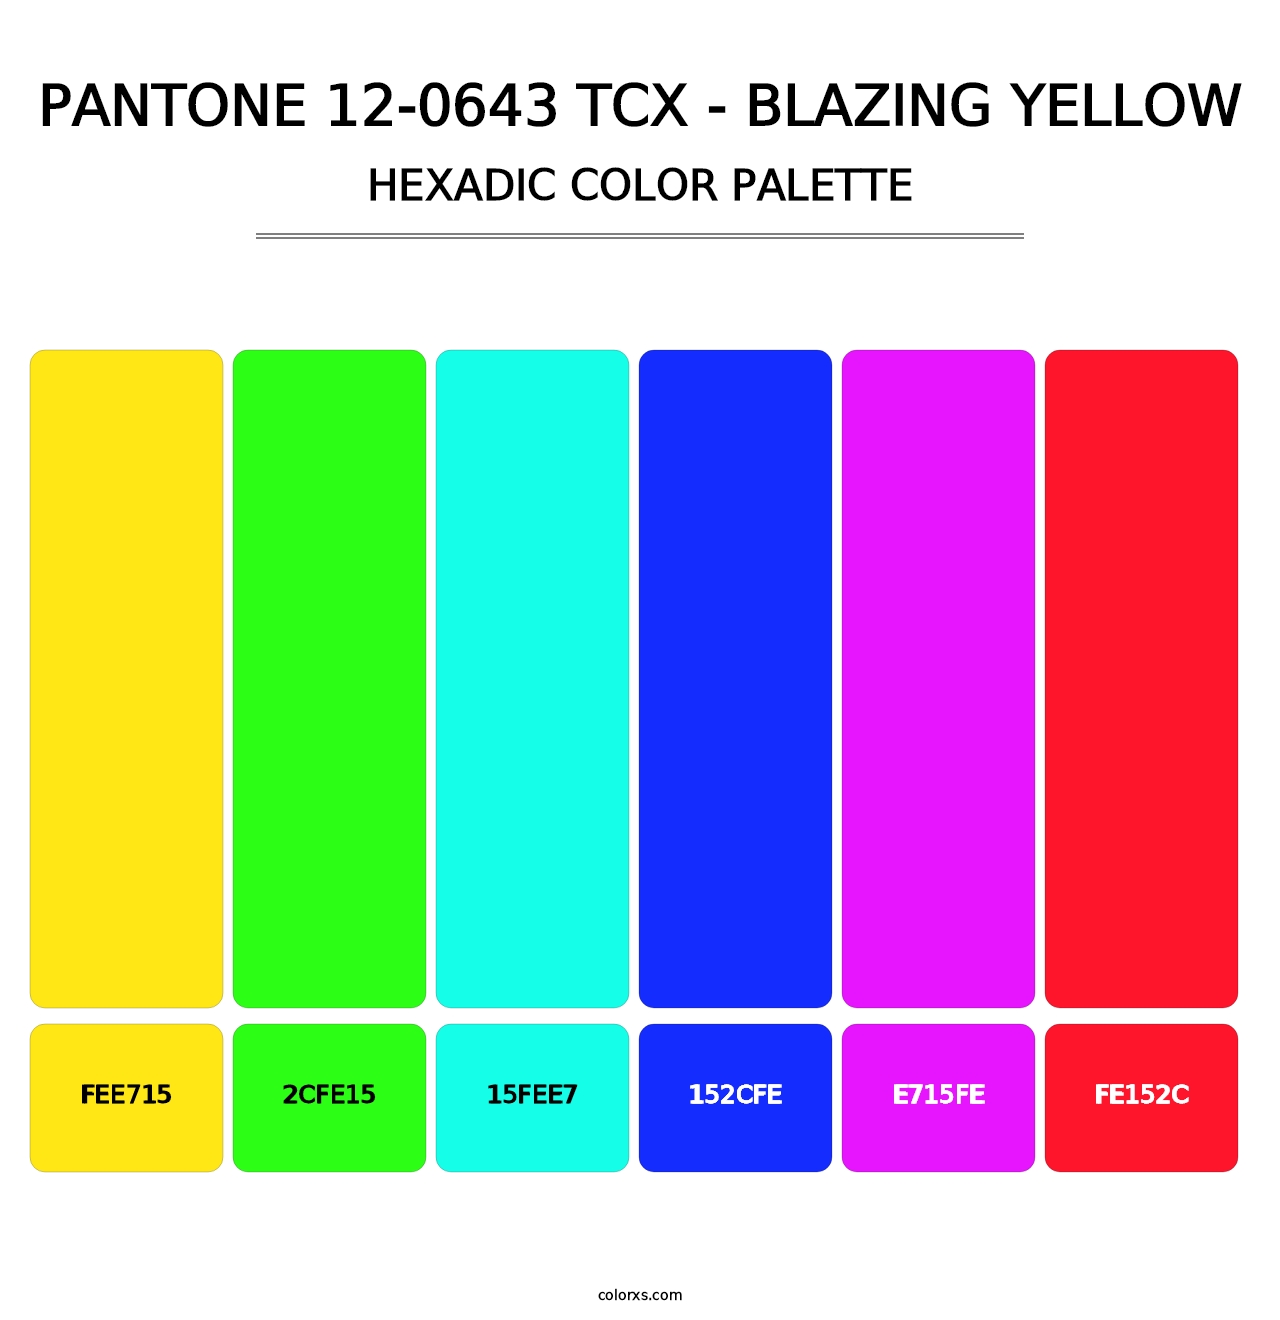 PANTONE 12-0643 TCX - Blazing Yellow - Hexadic Color Palette